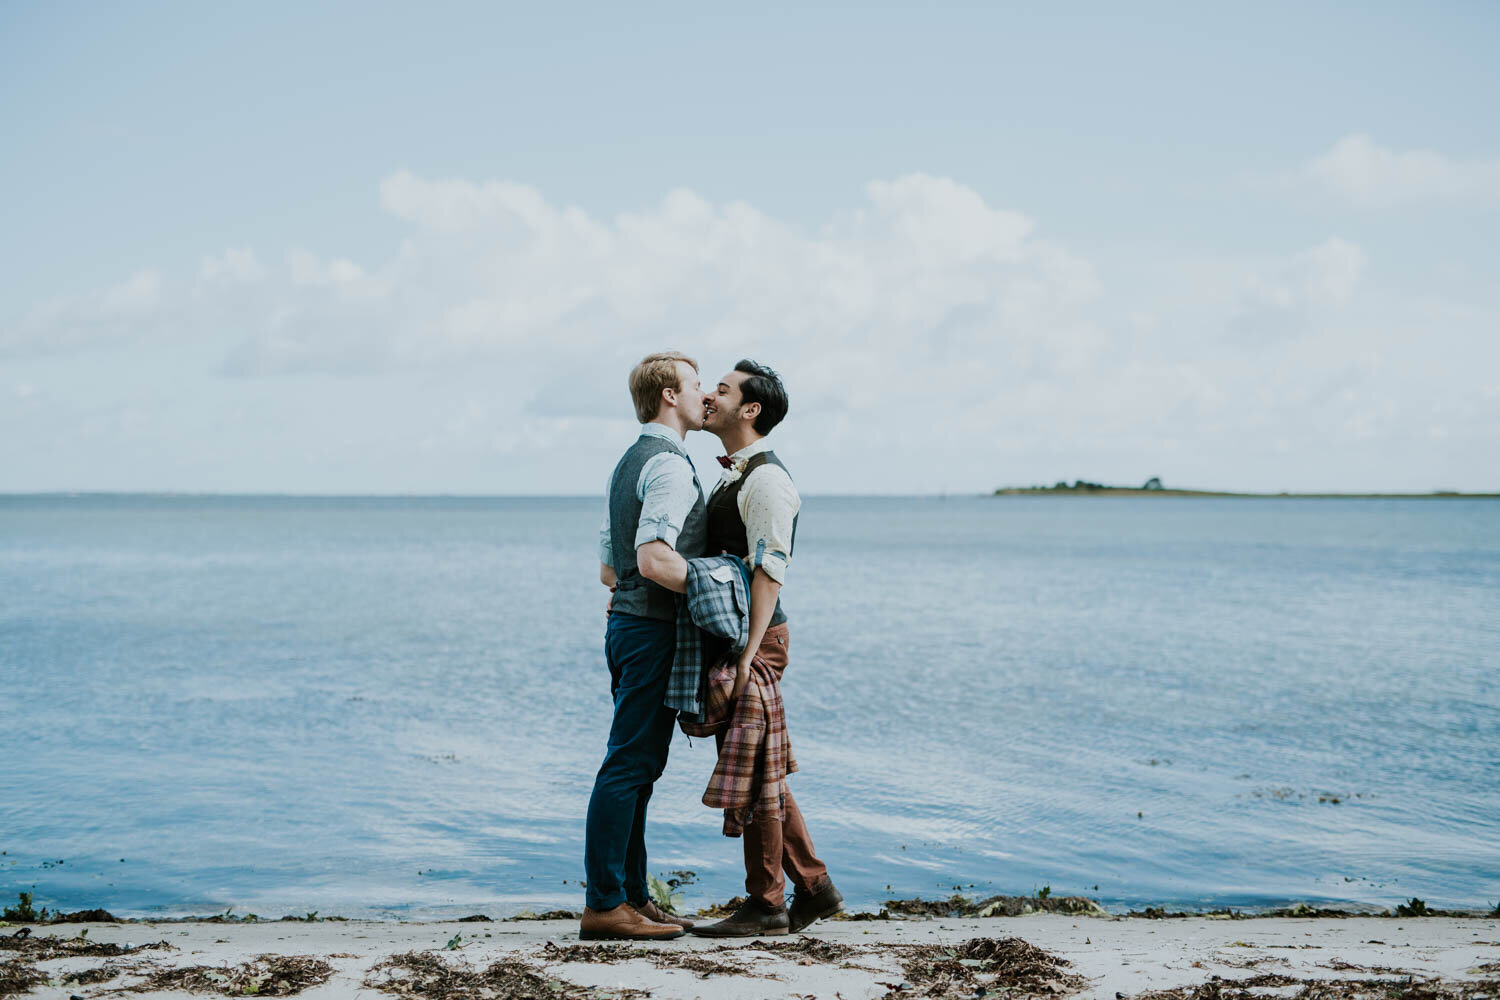 Lgbtq elopement in denmark | Gay couple getting married in Denmark | lgbtq+ weddings | Denmark wedding venue | Aero Island | Danish Island Weddings | Full service wedding planners